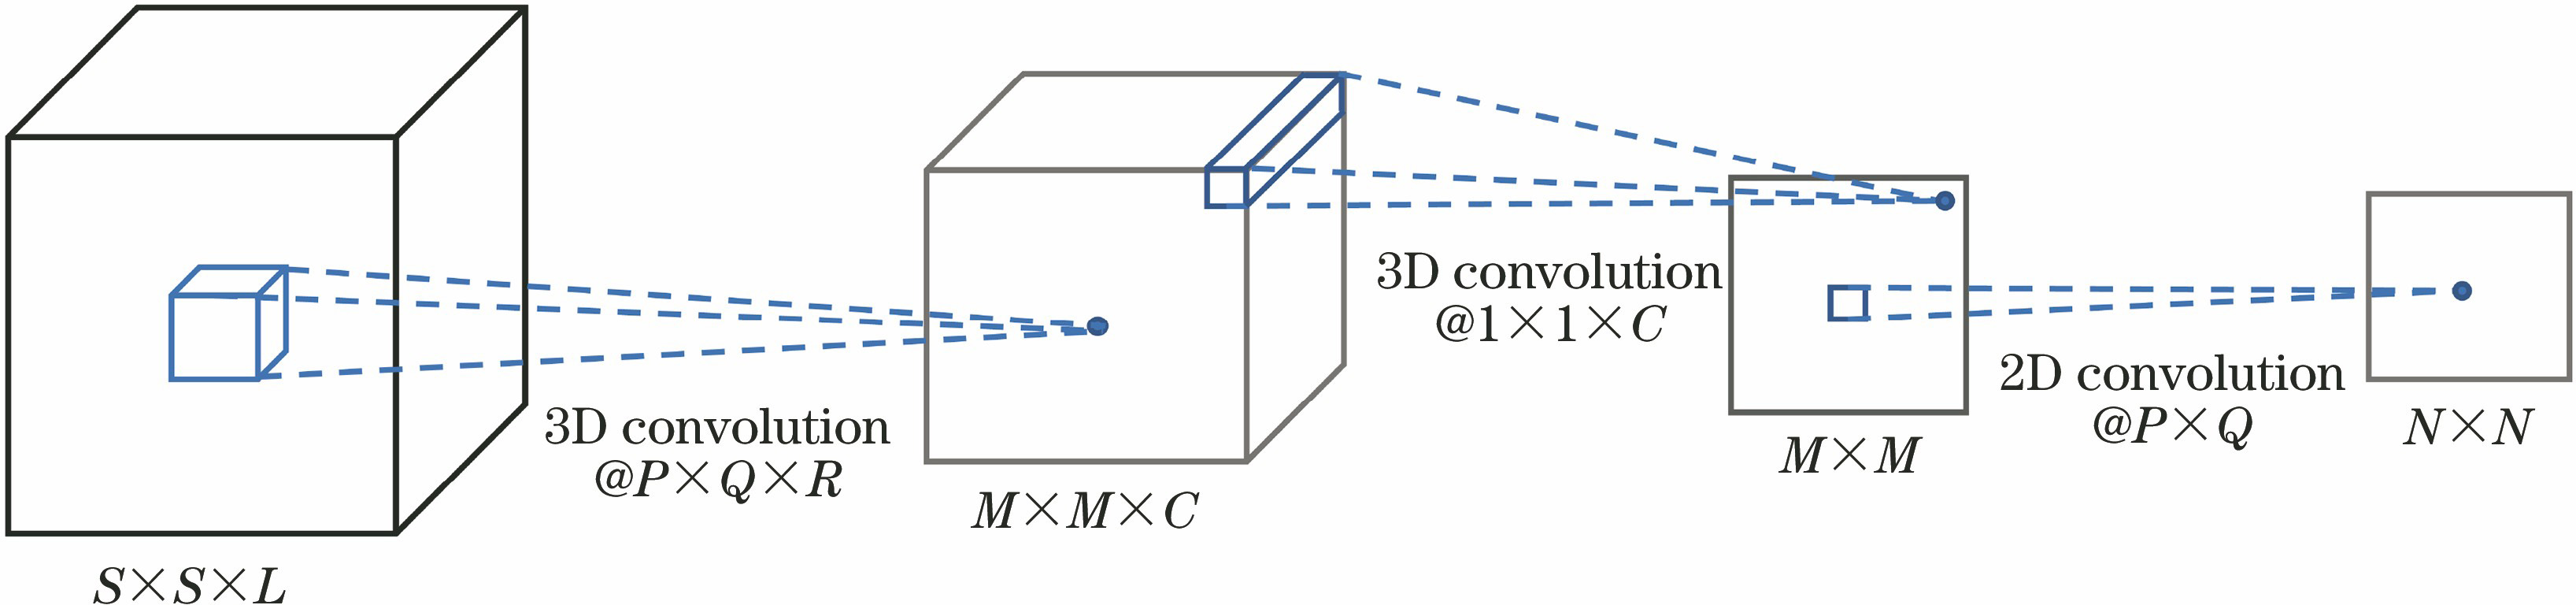 Structure of tandem 3D-2D-CNN